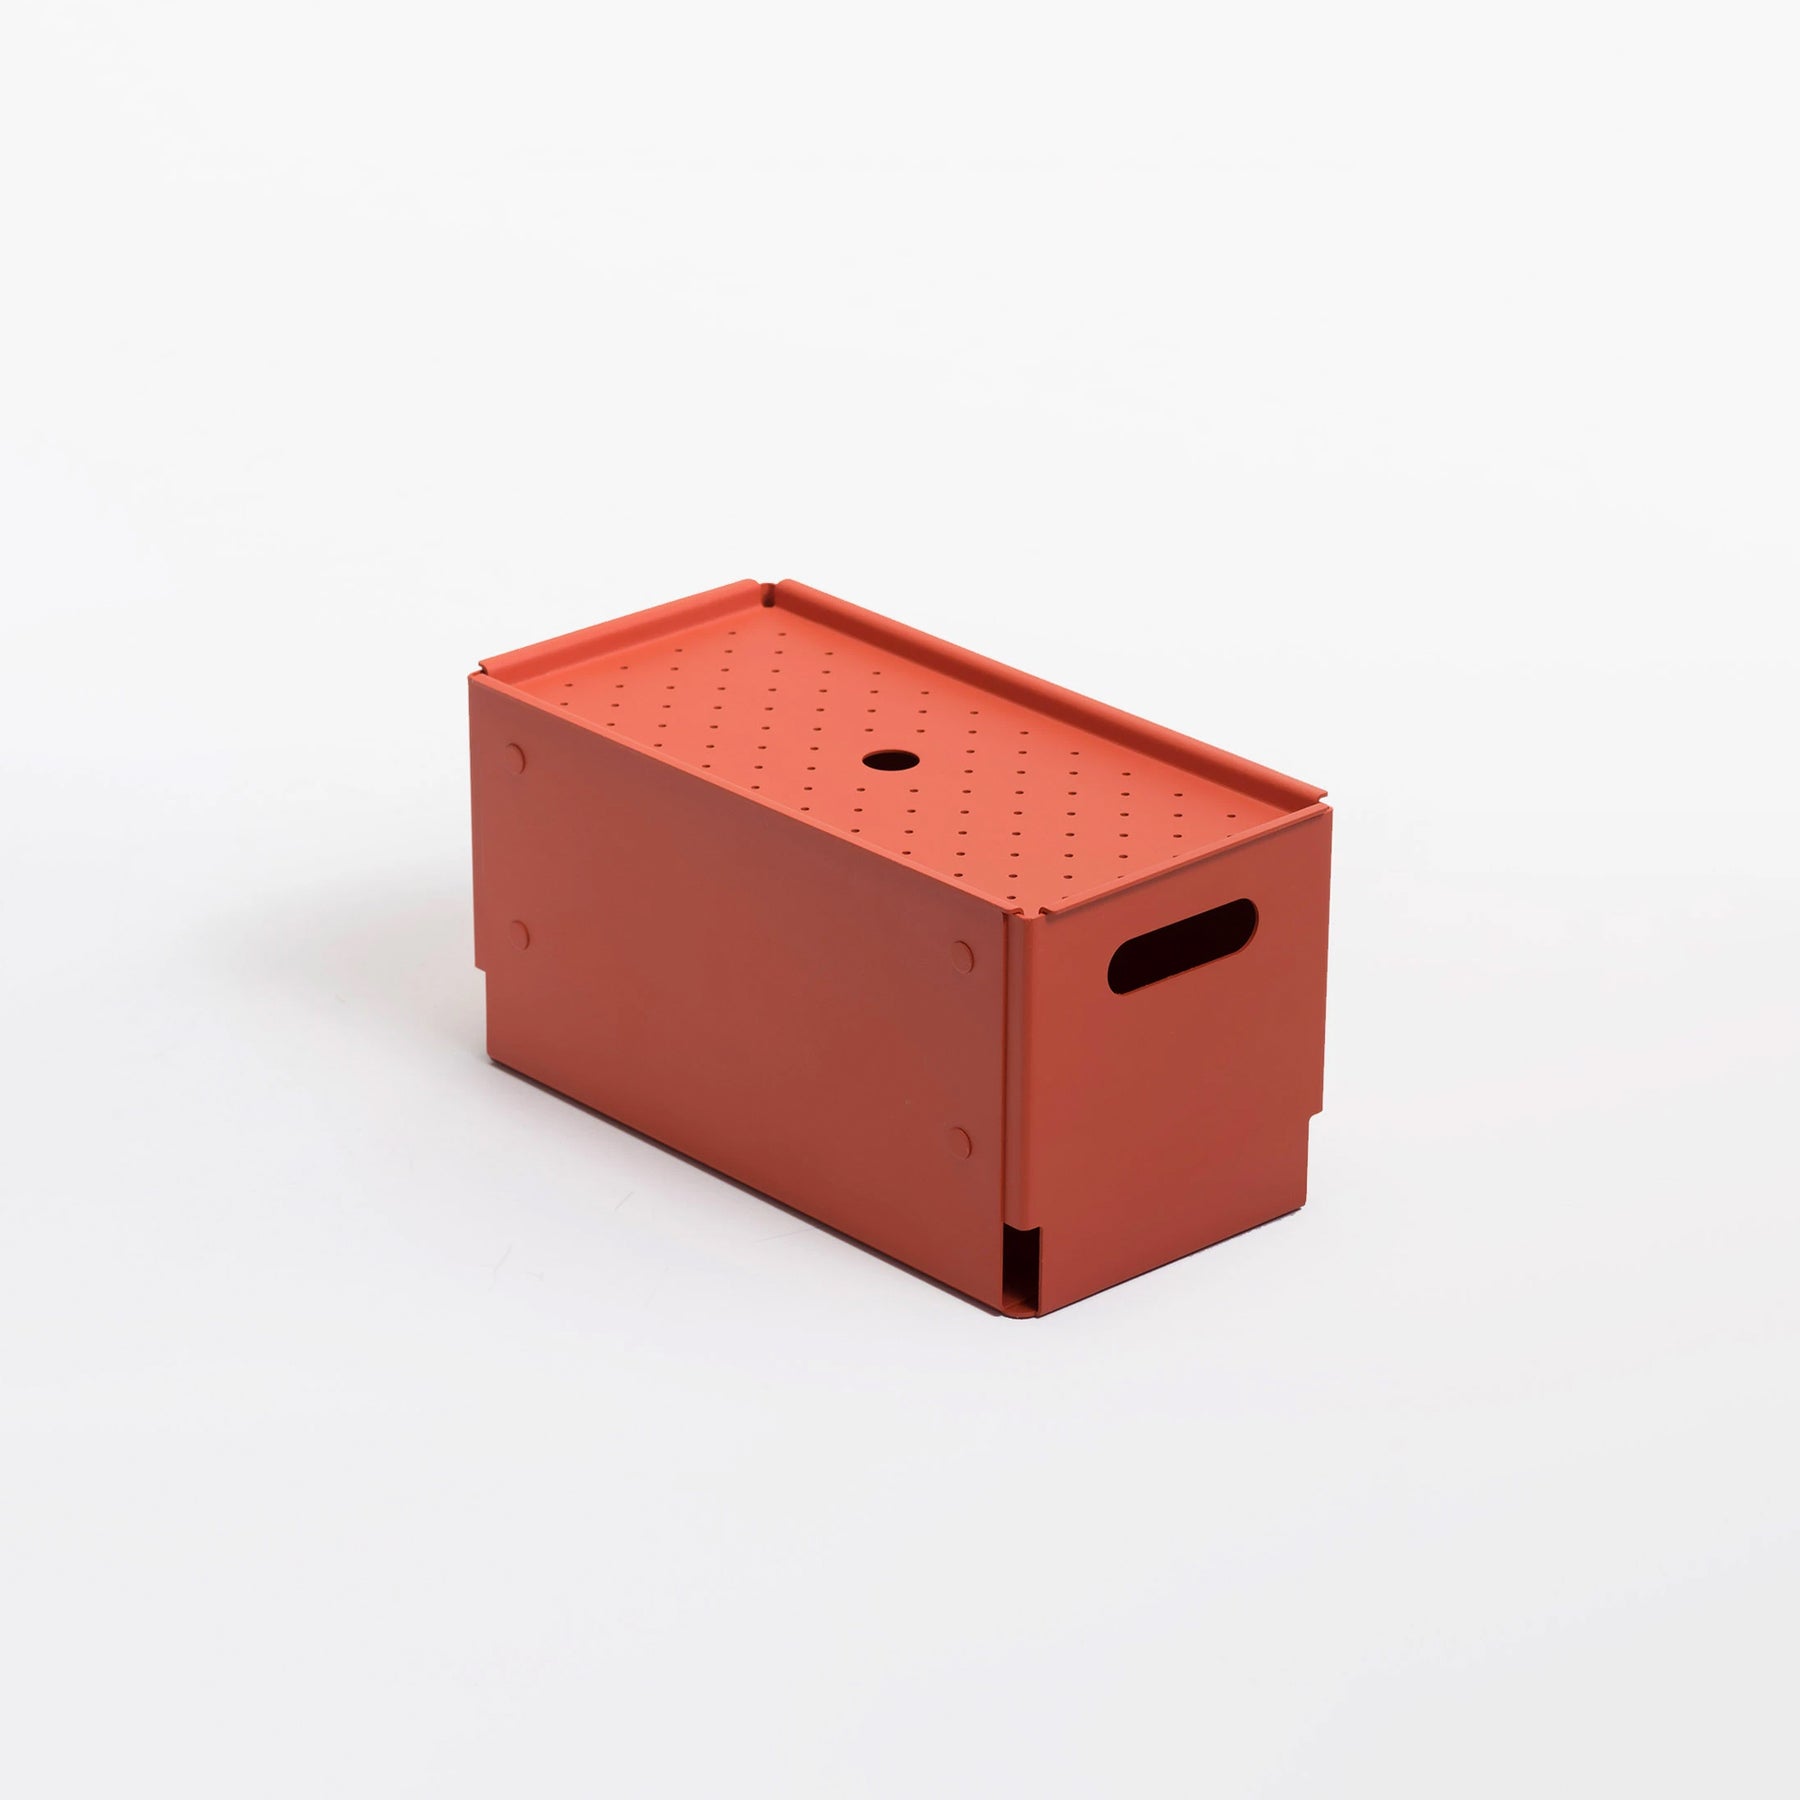 Euro S Storage Box